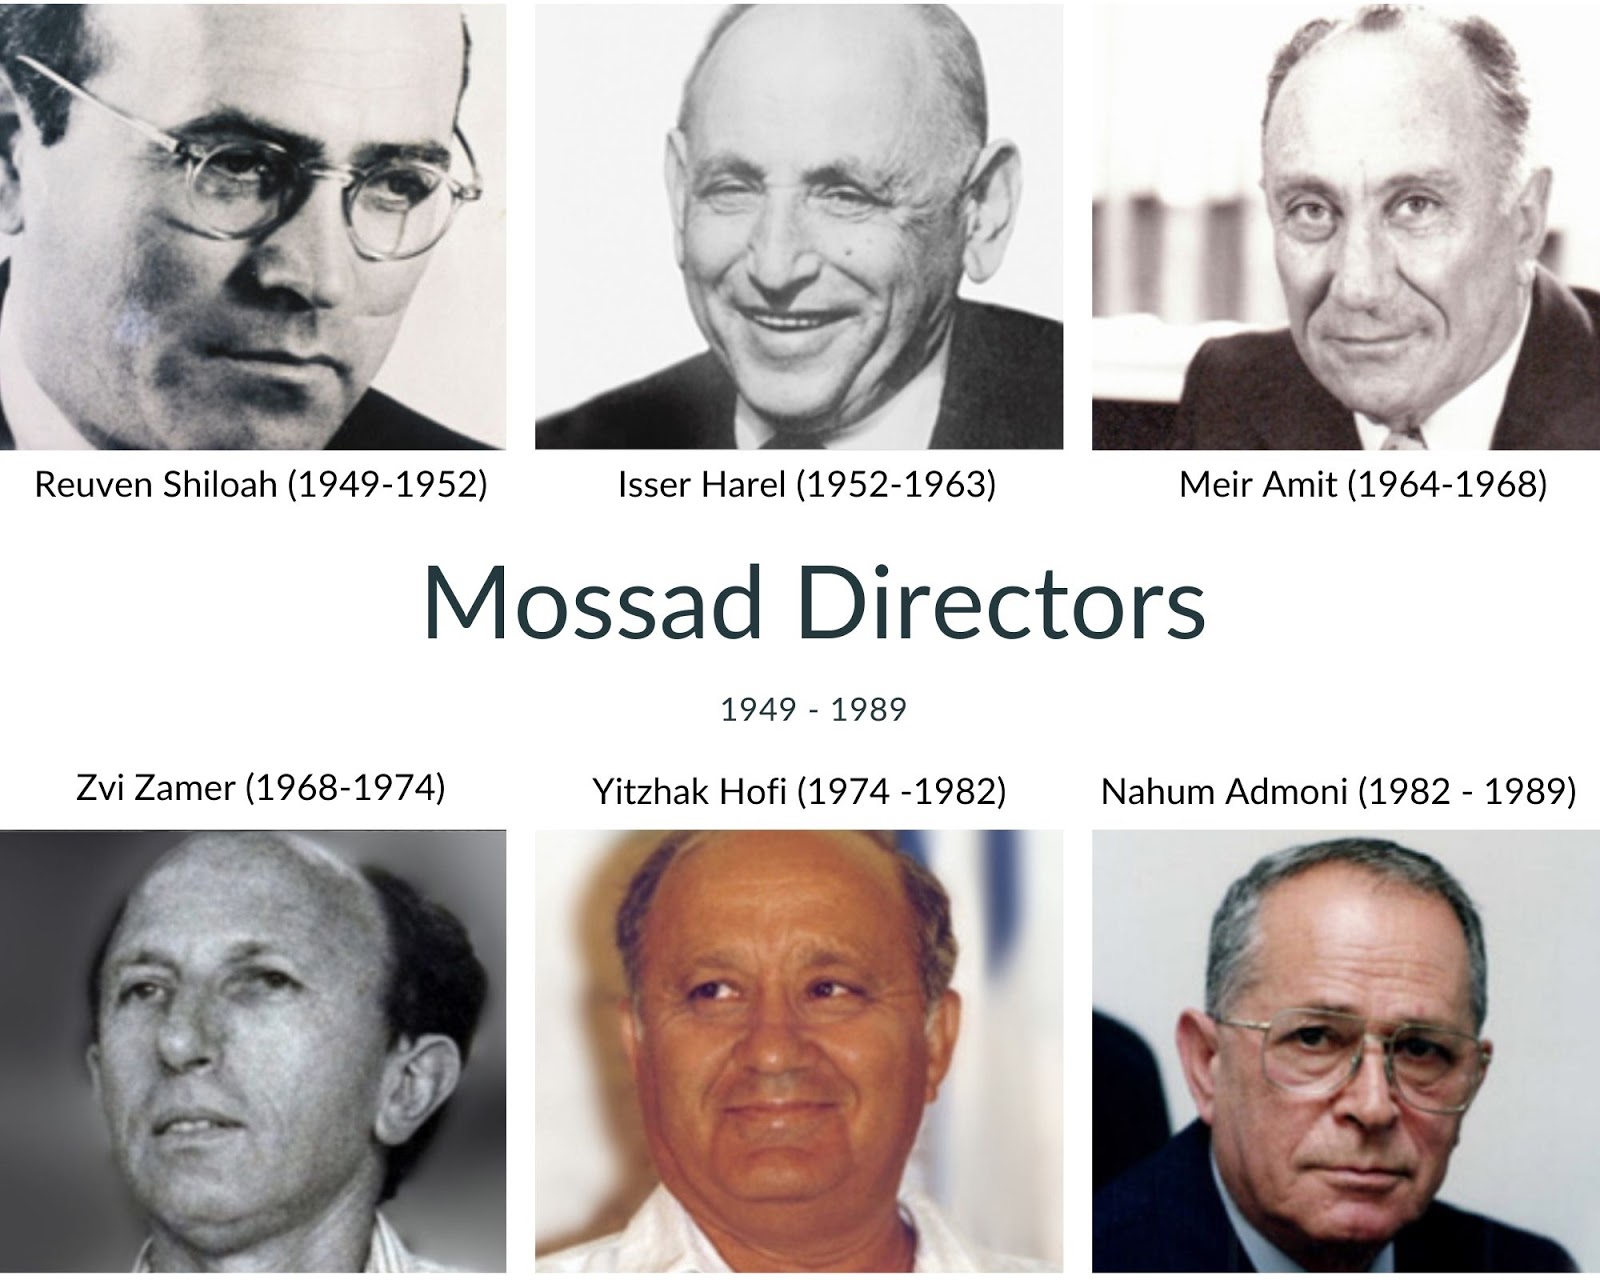 Mossad's former Directors